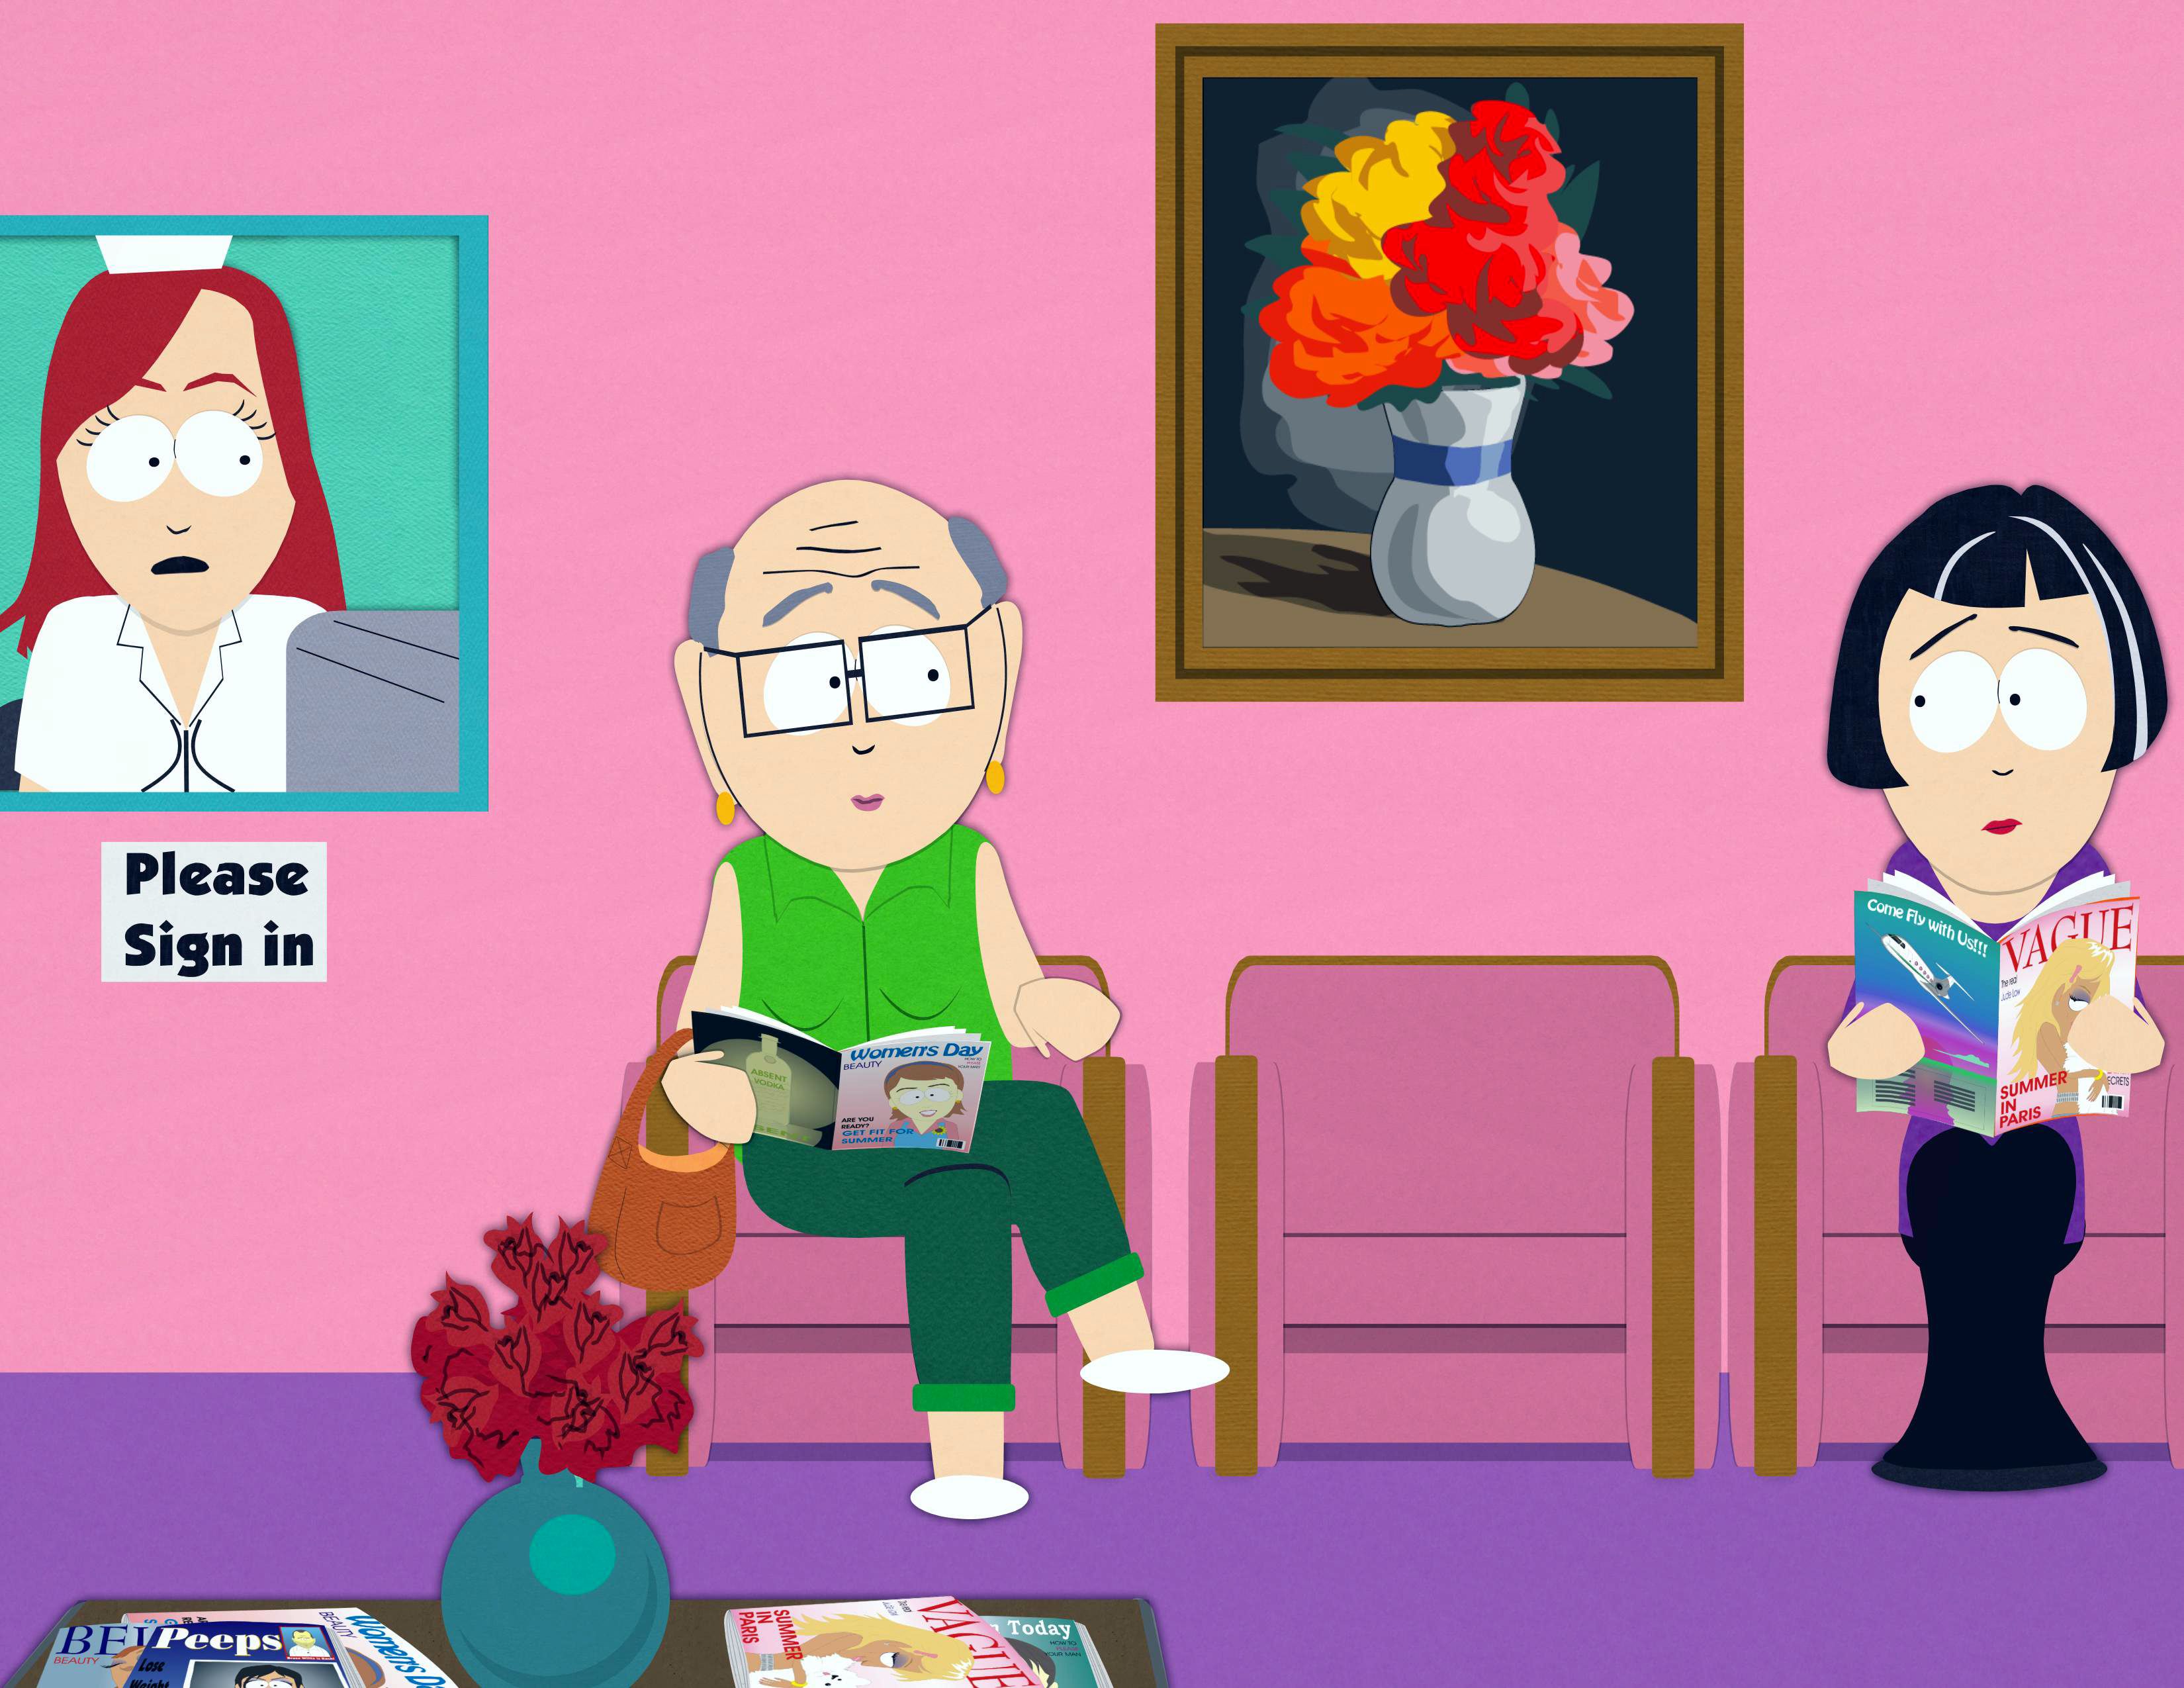 South Park Season 9 premiere: Mr. Garrison waits in a doctor's office